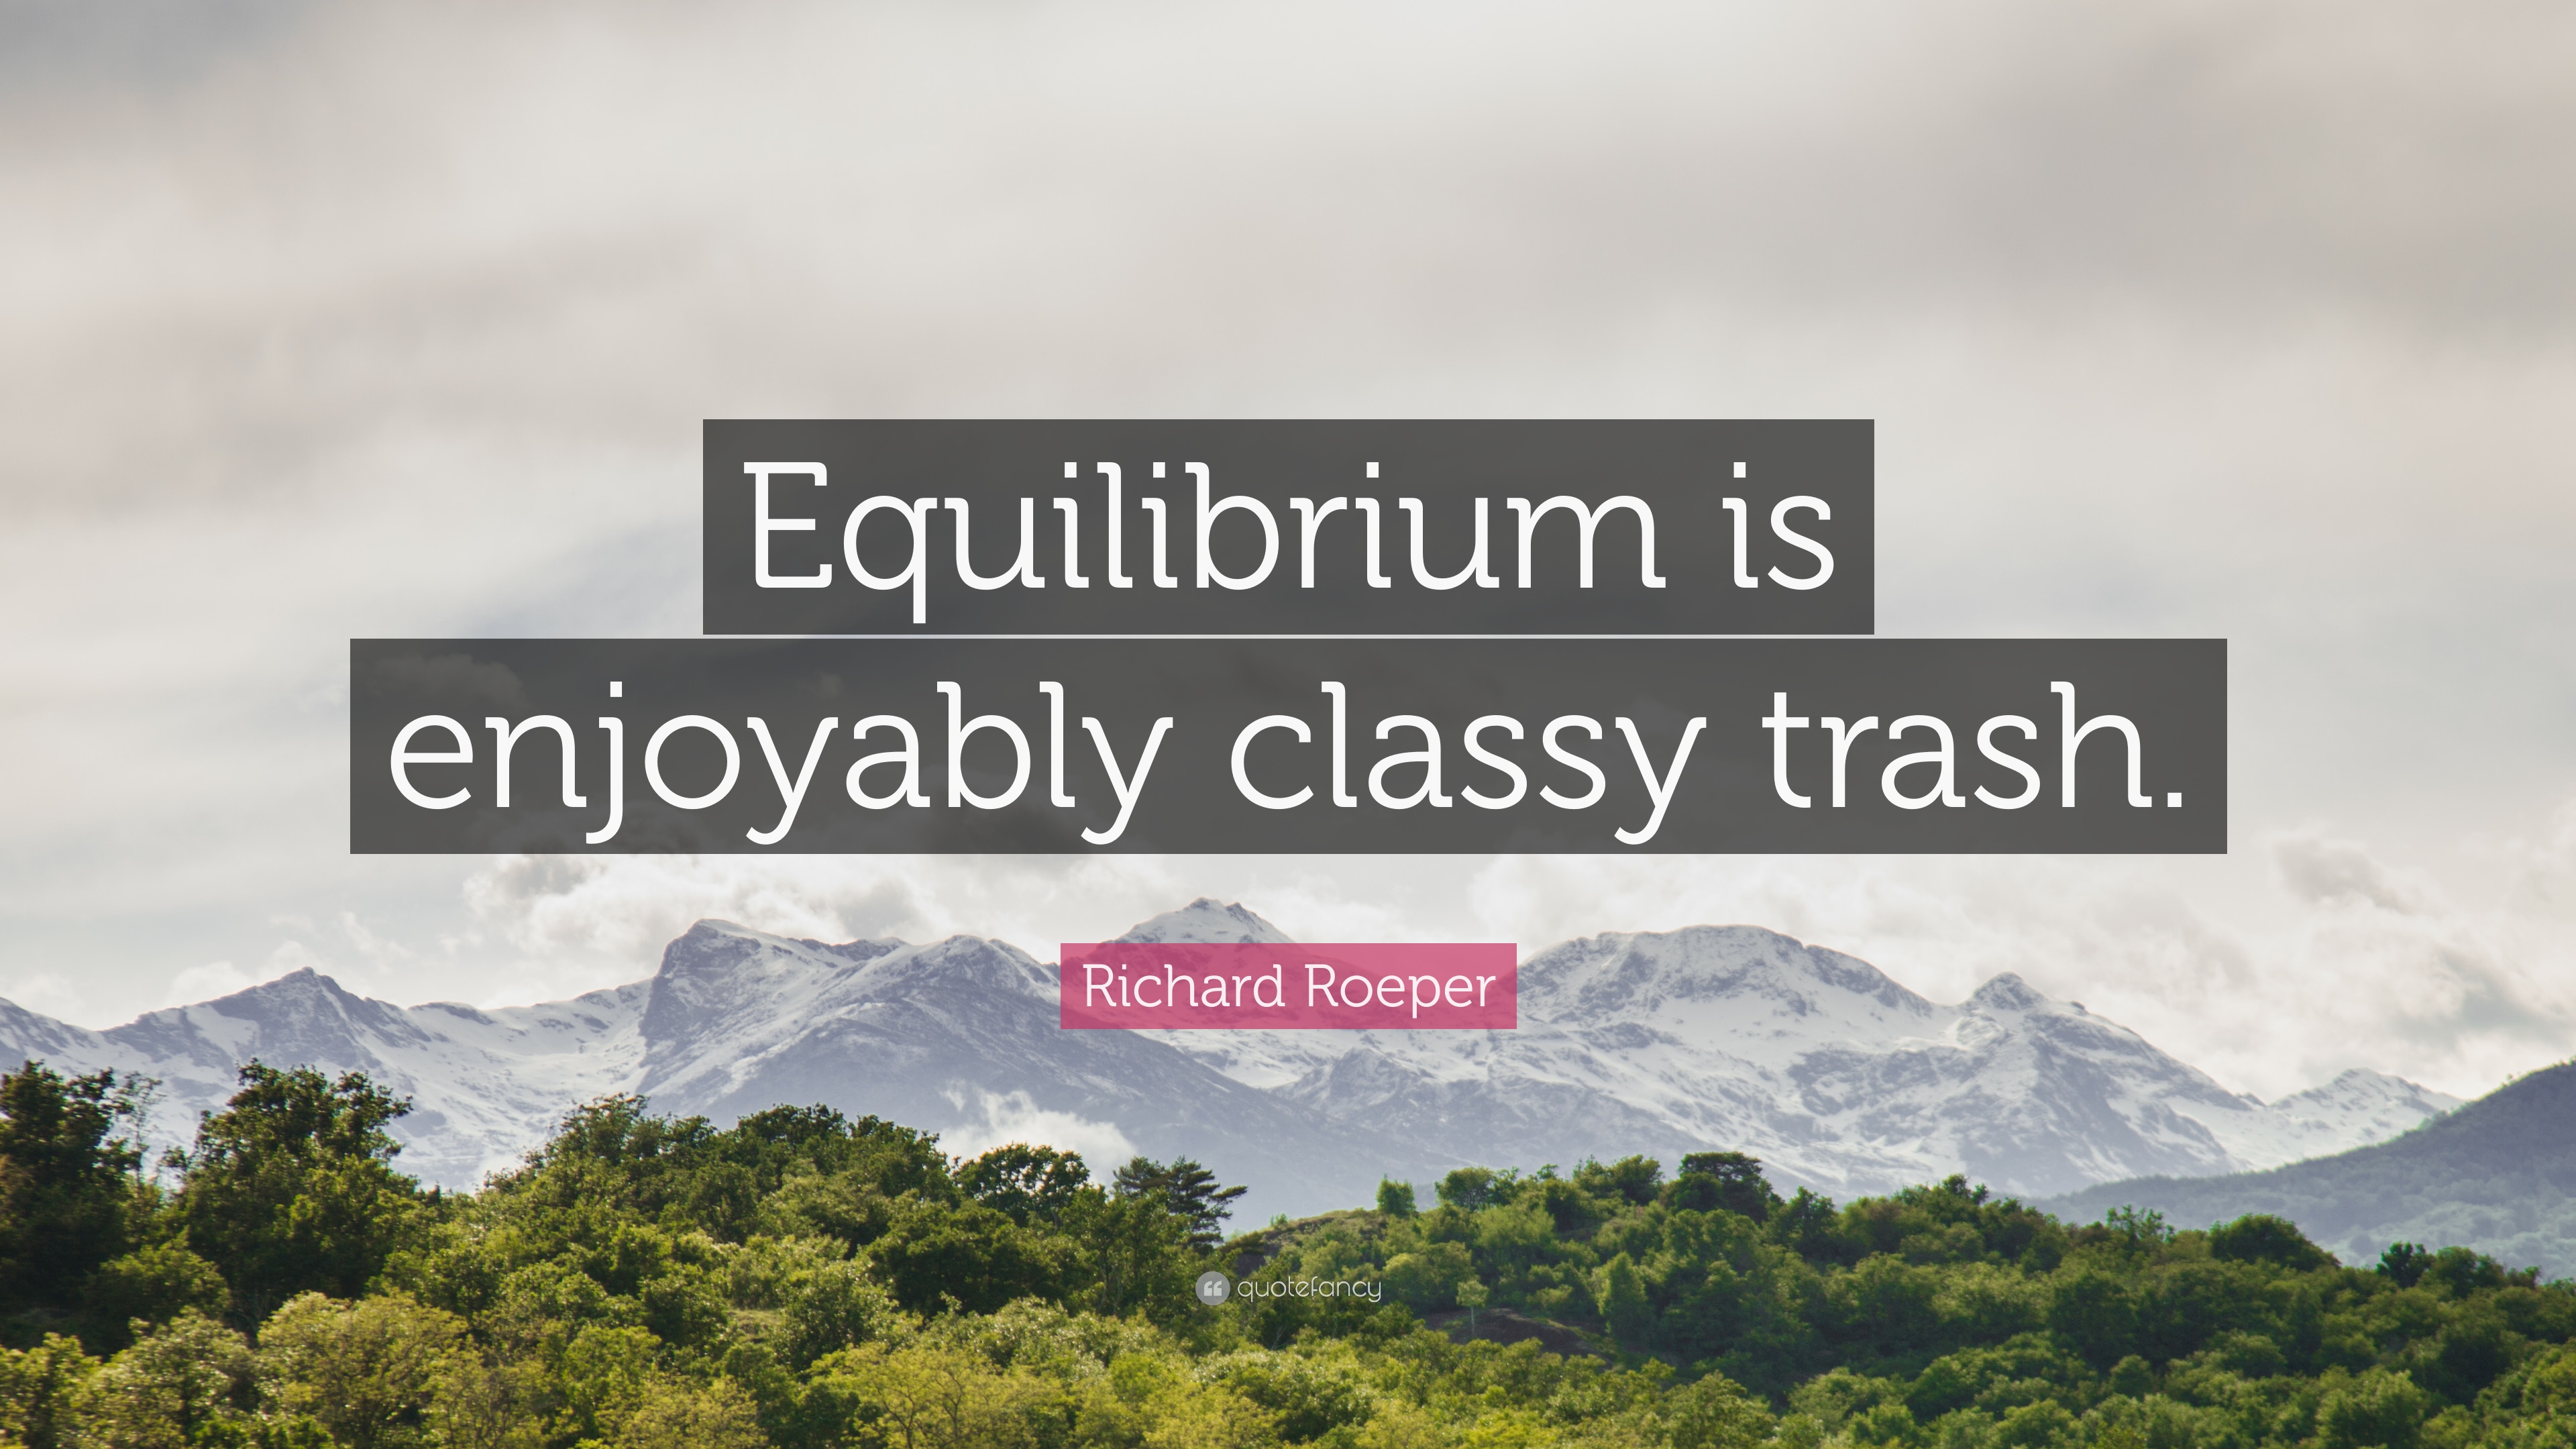 Richard Roeper Quote: “Equilibrium is enjoyably classy trash.” 7